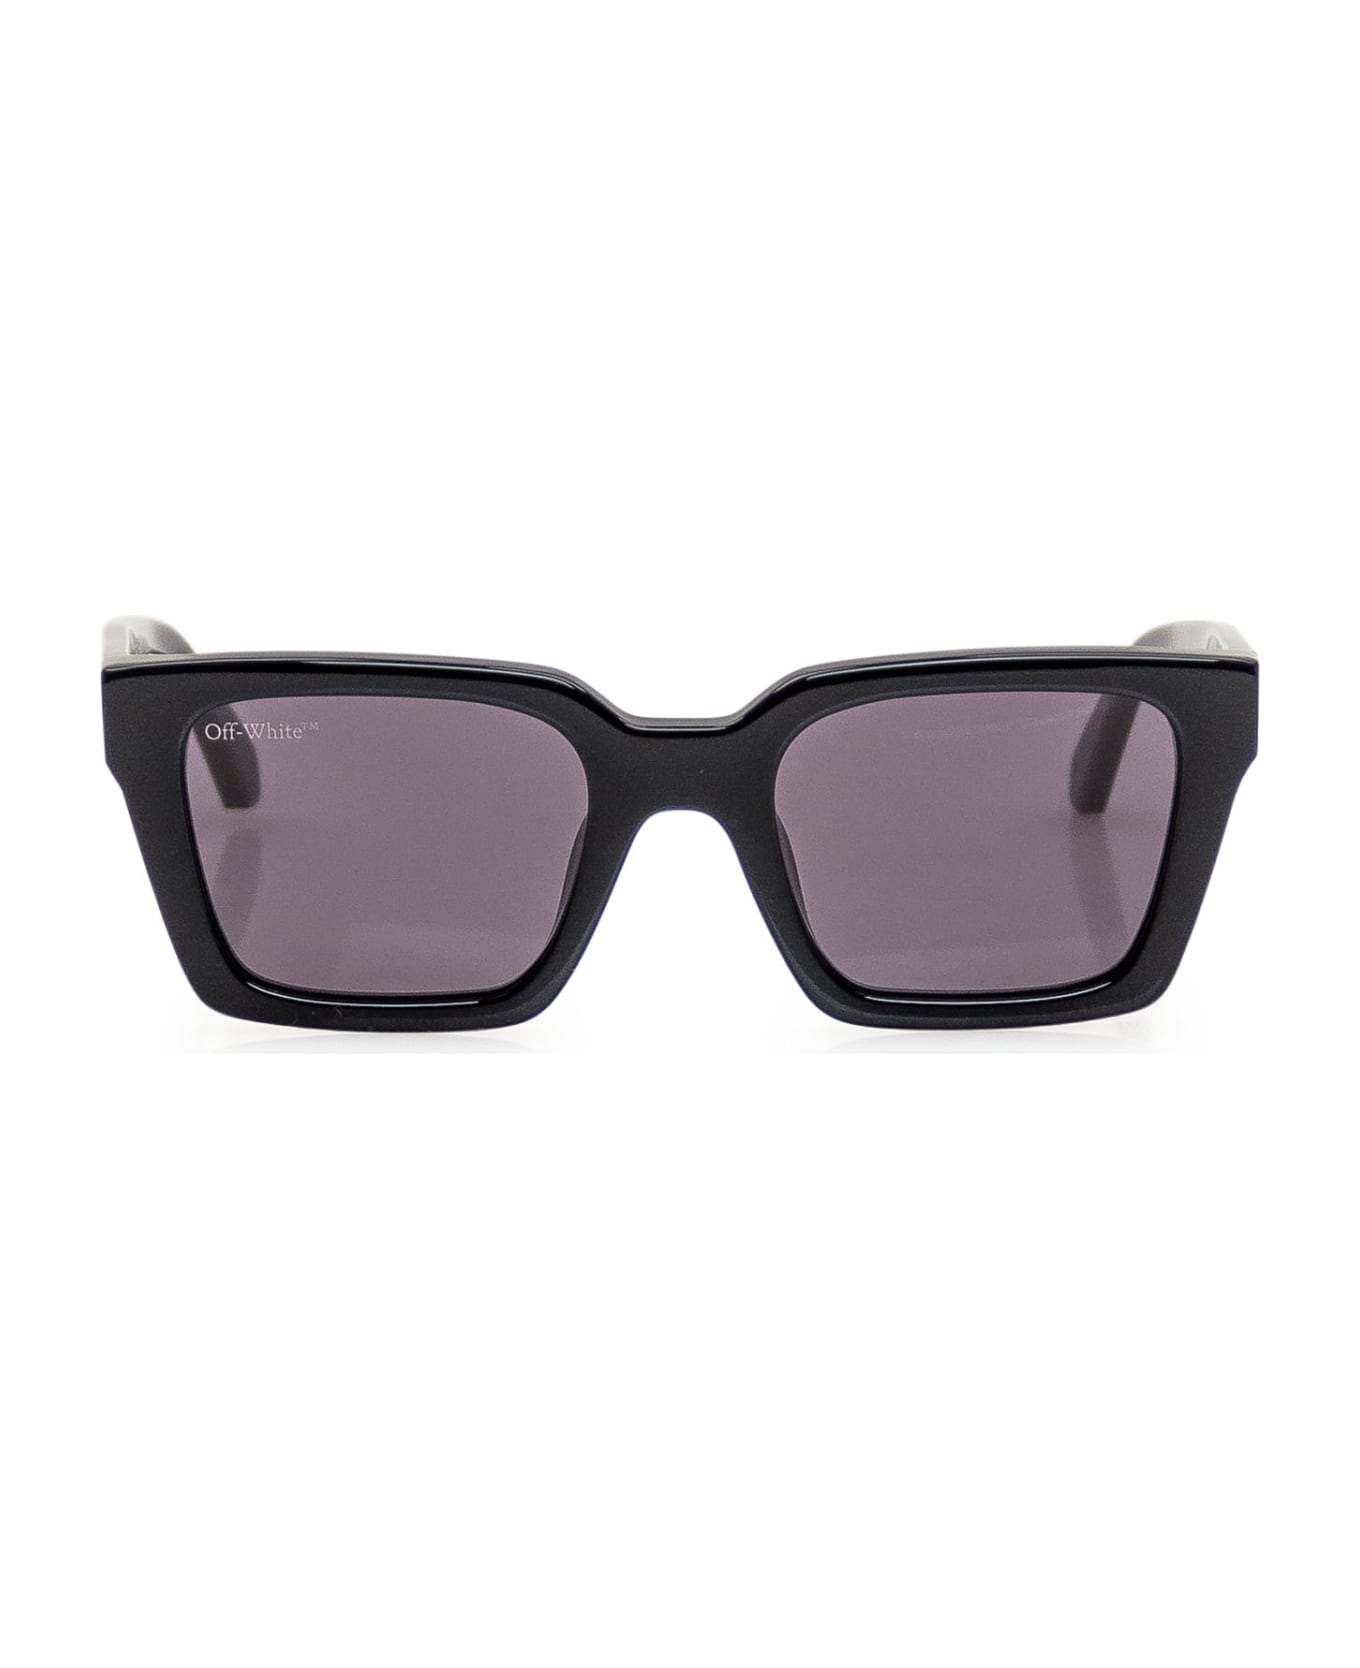 Off-White Palermo Sunglasses - BLACK DARK